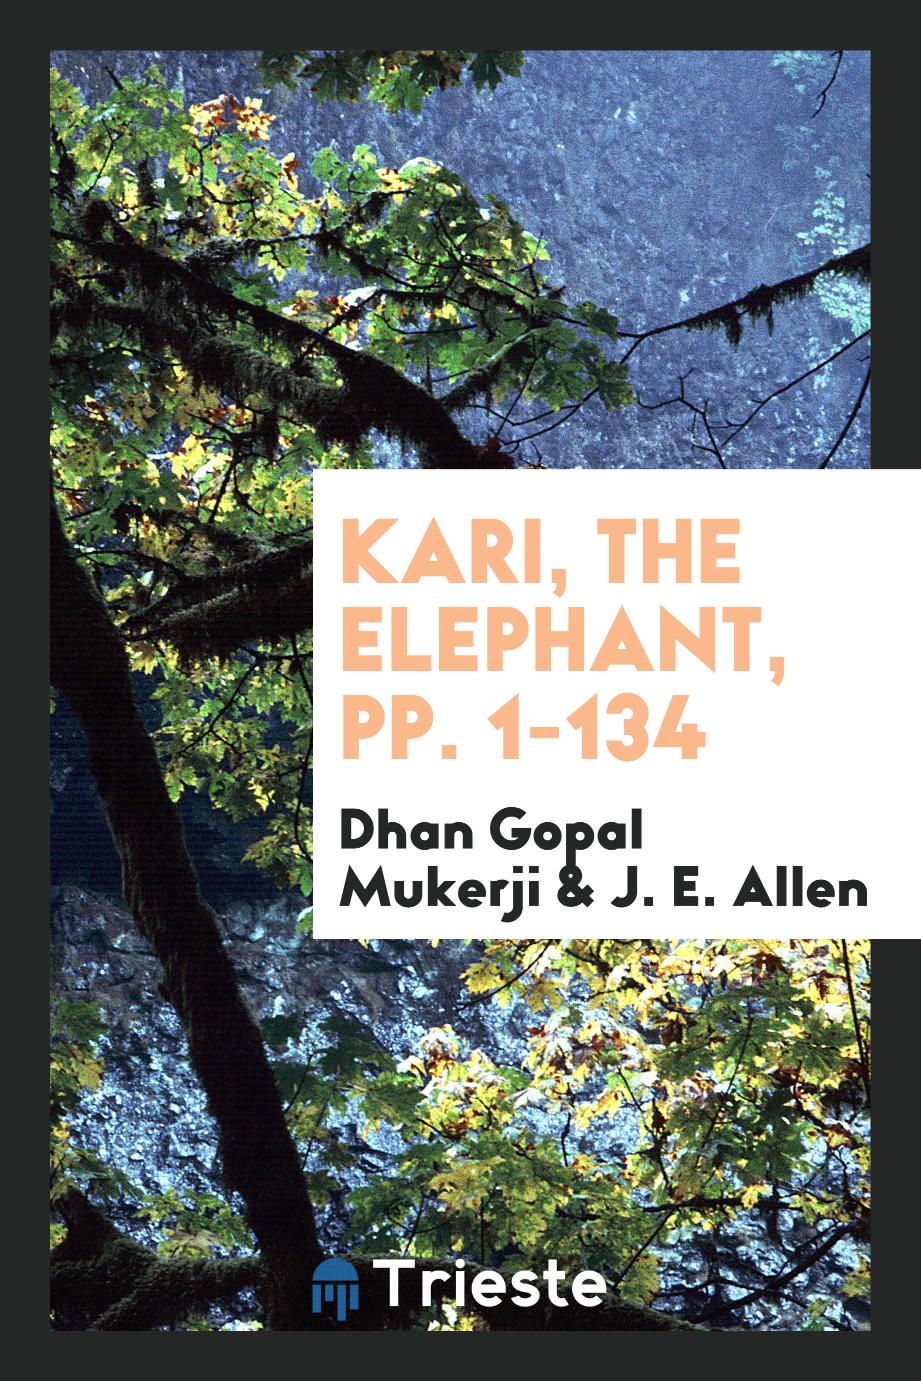 Kari, the Elephant, pp. 1-134